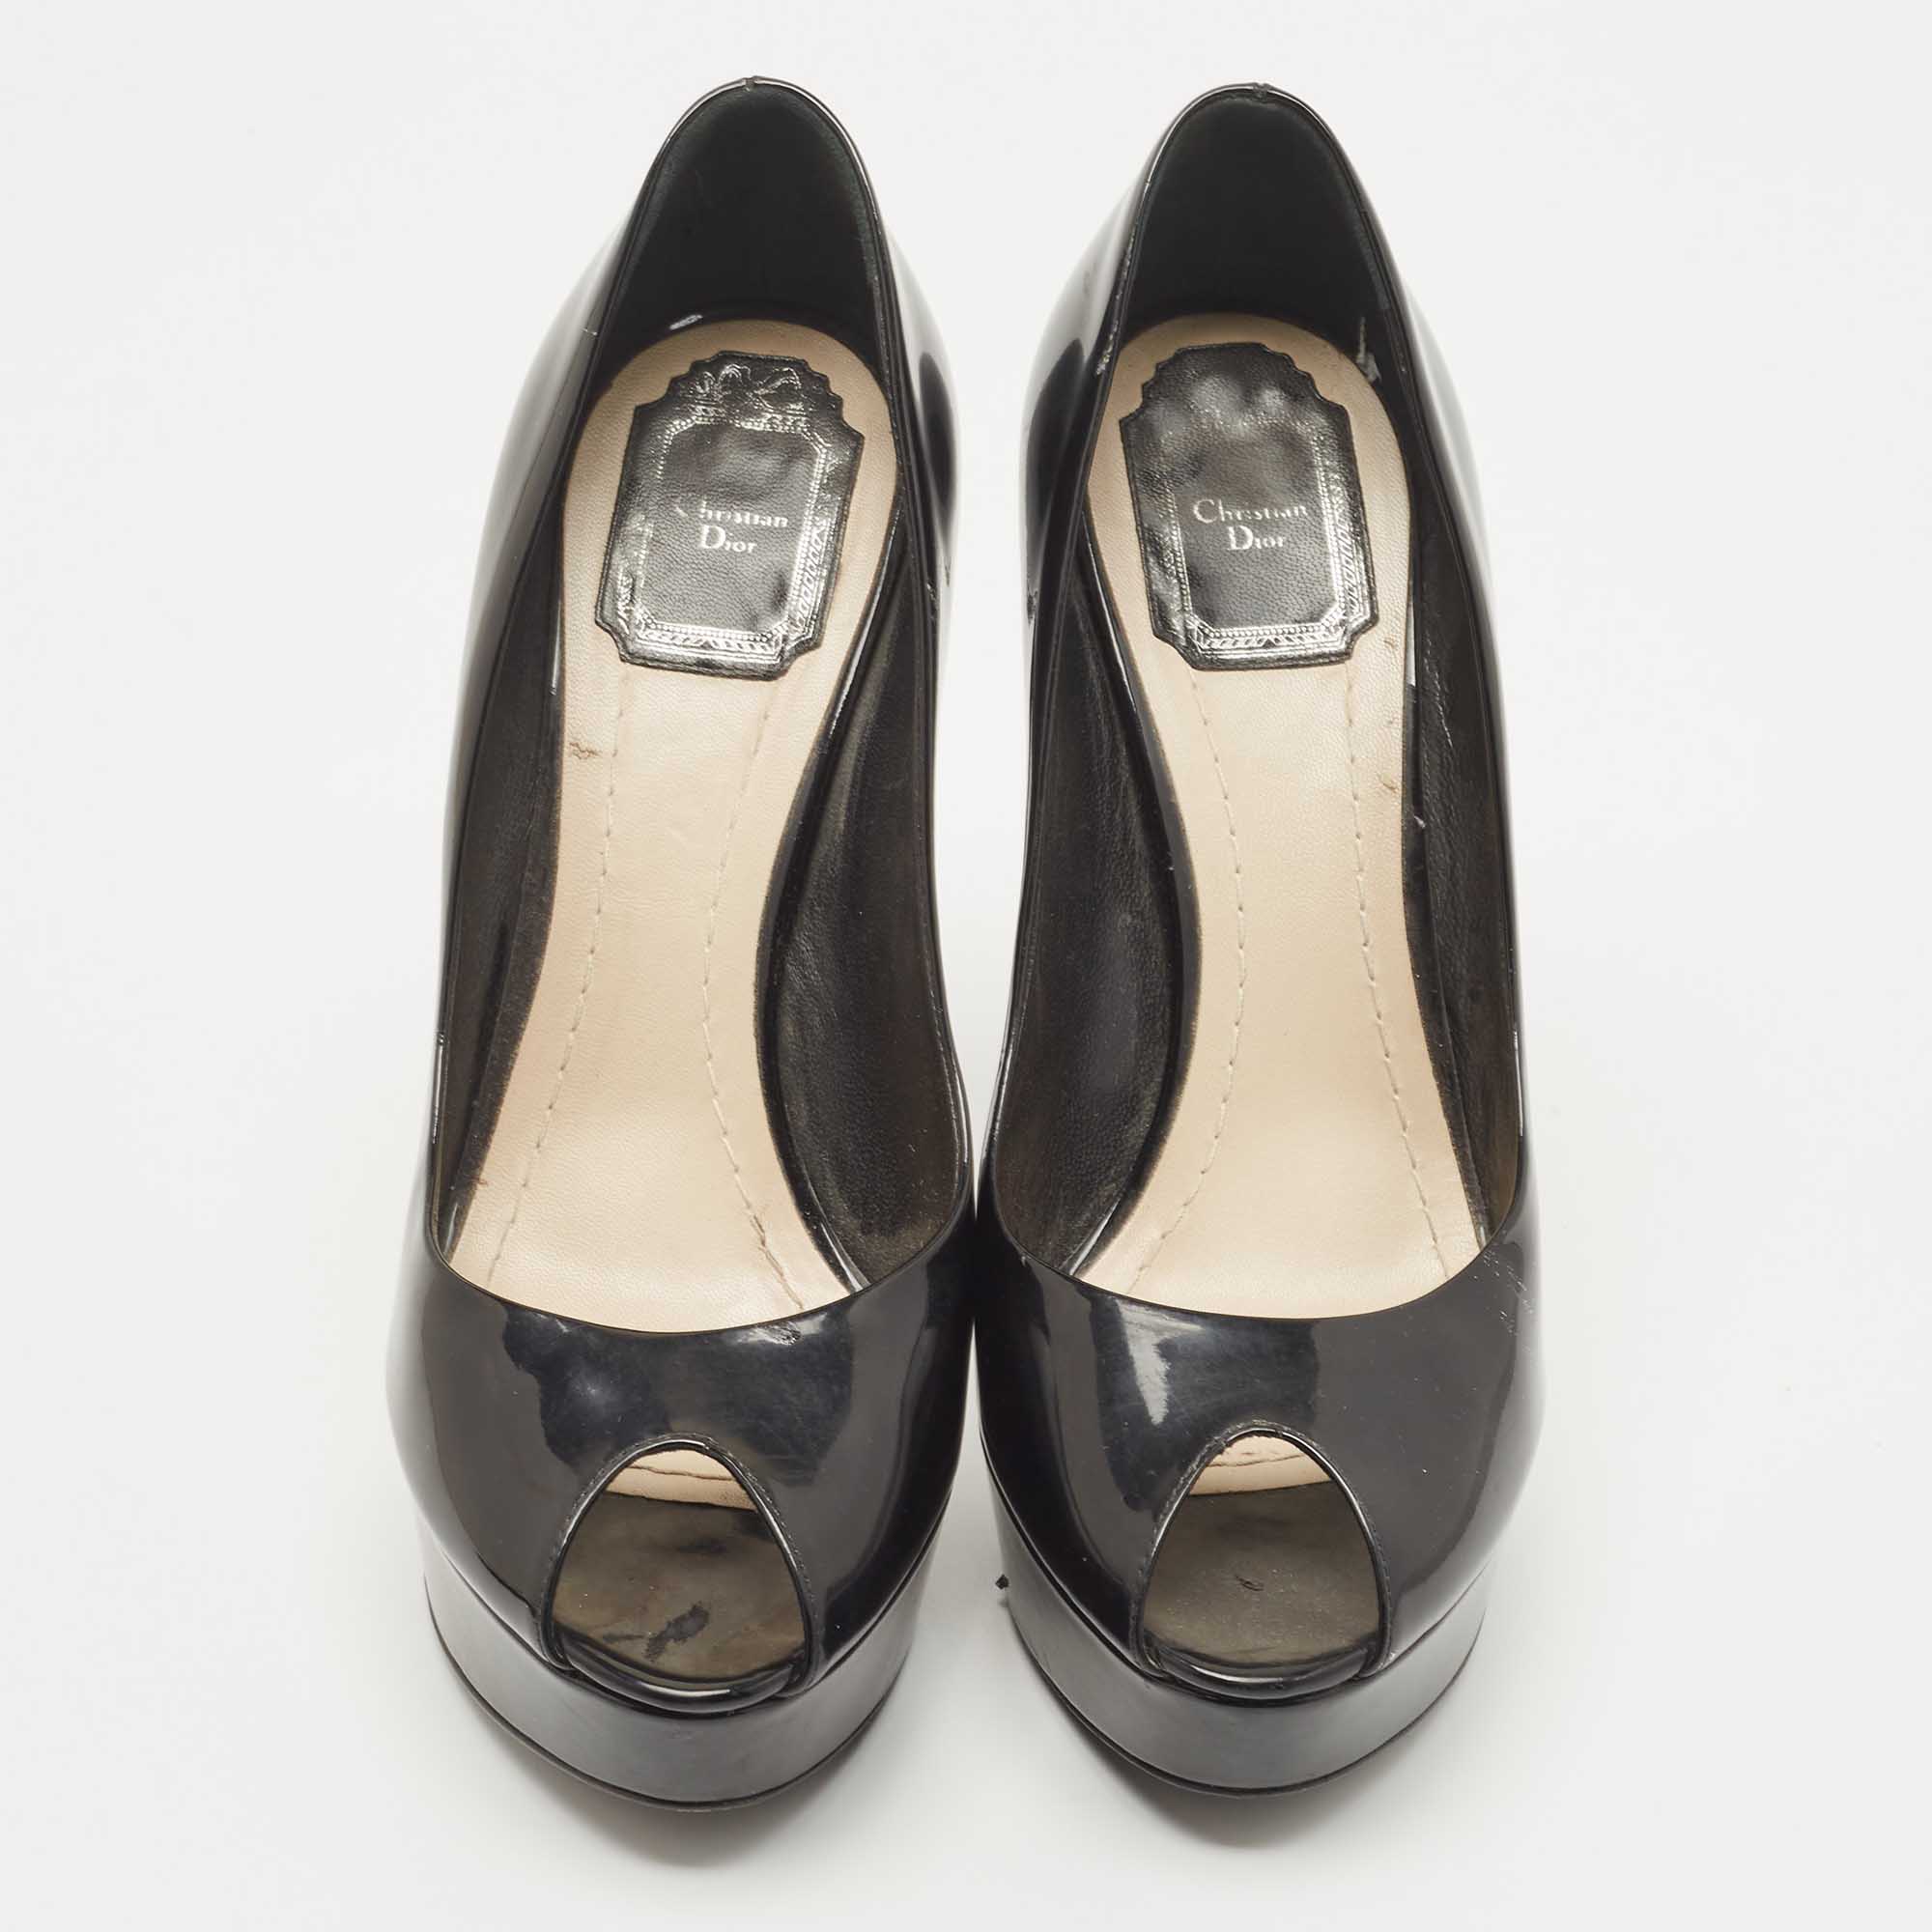 Dior Black Patent Miss Dior Peep Toe Pumps Size 39